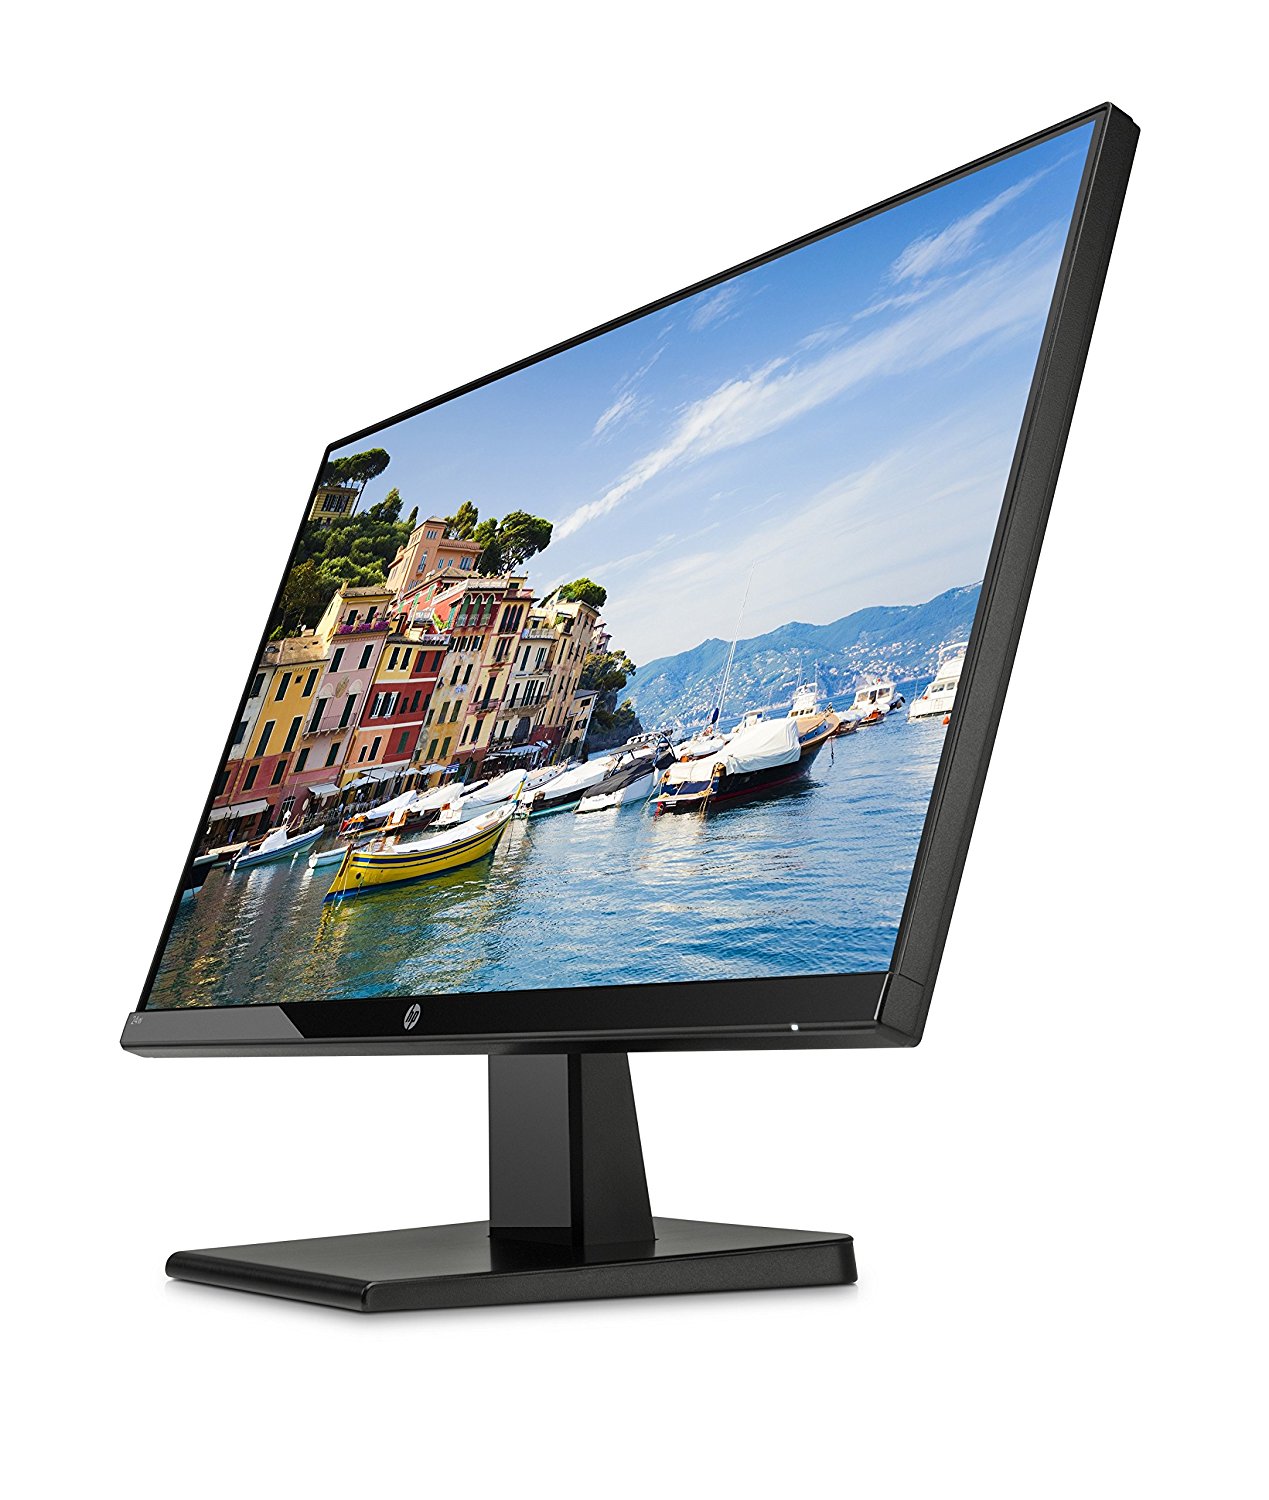 HP 24w 23.8-inch LED Monitor (Black Onyx)